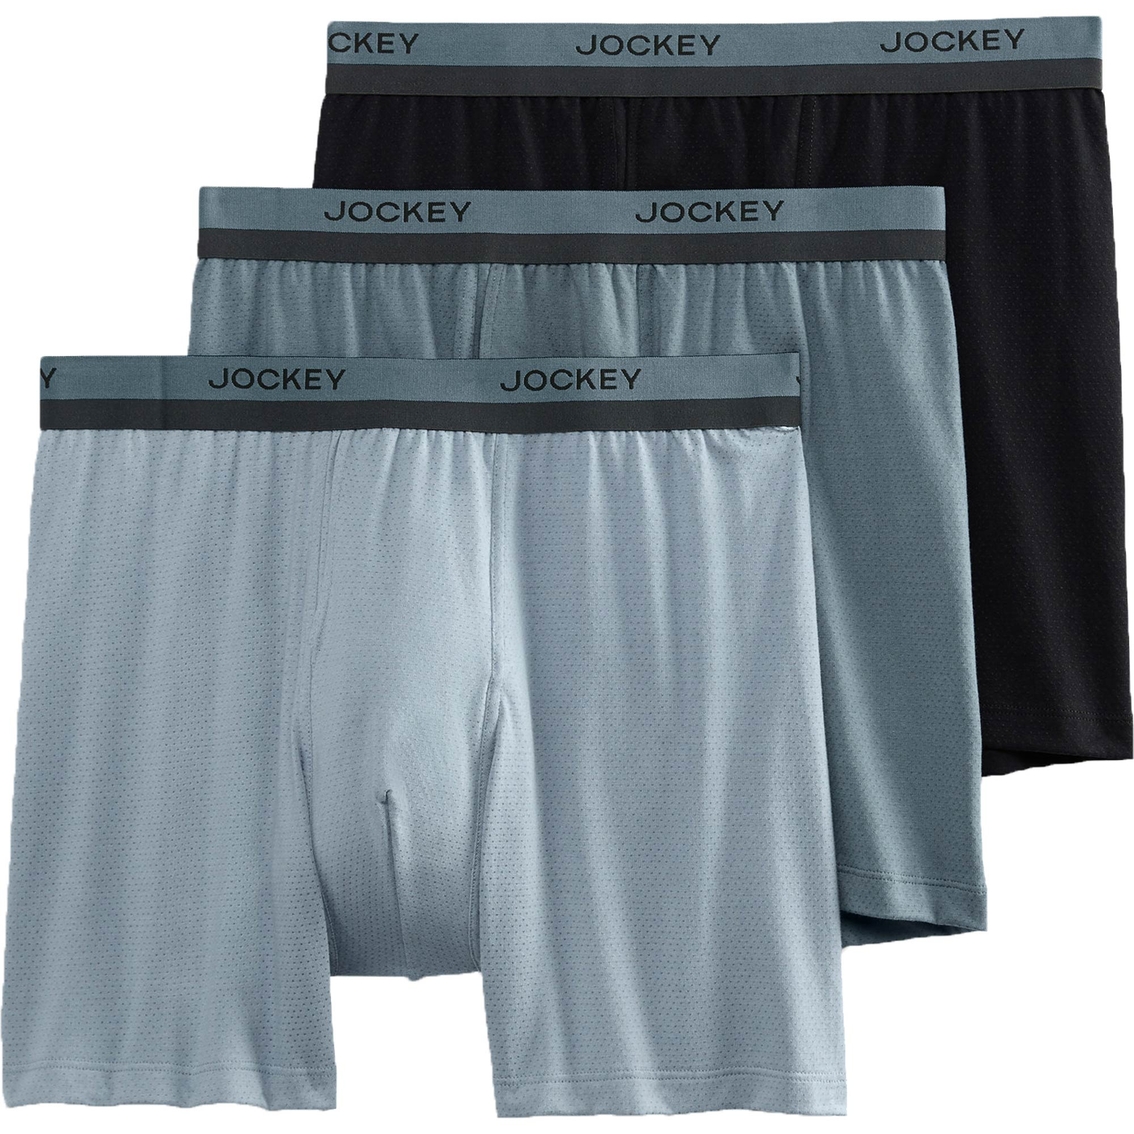 Jockey Ultimate Breathe Boxer Briefs 3 Pk., Underwear